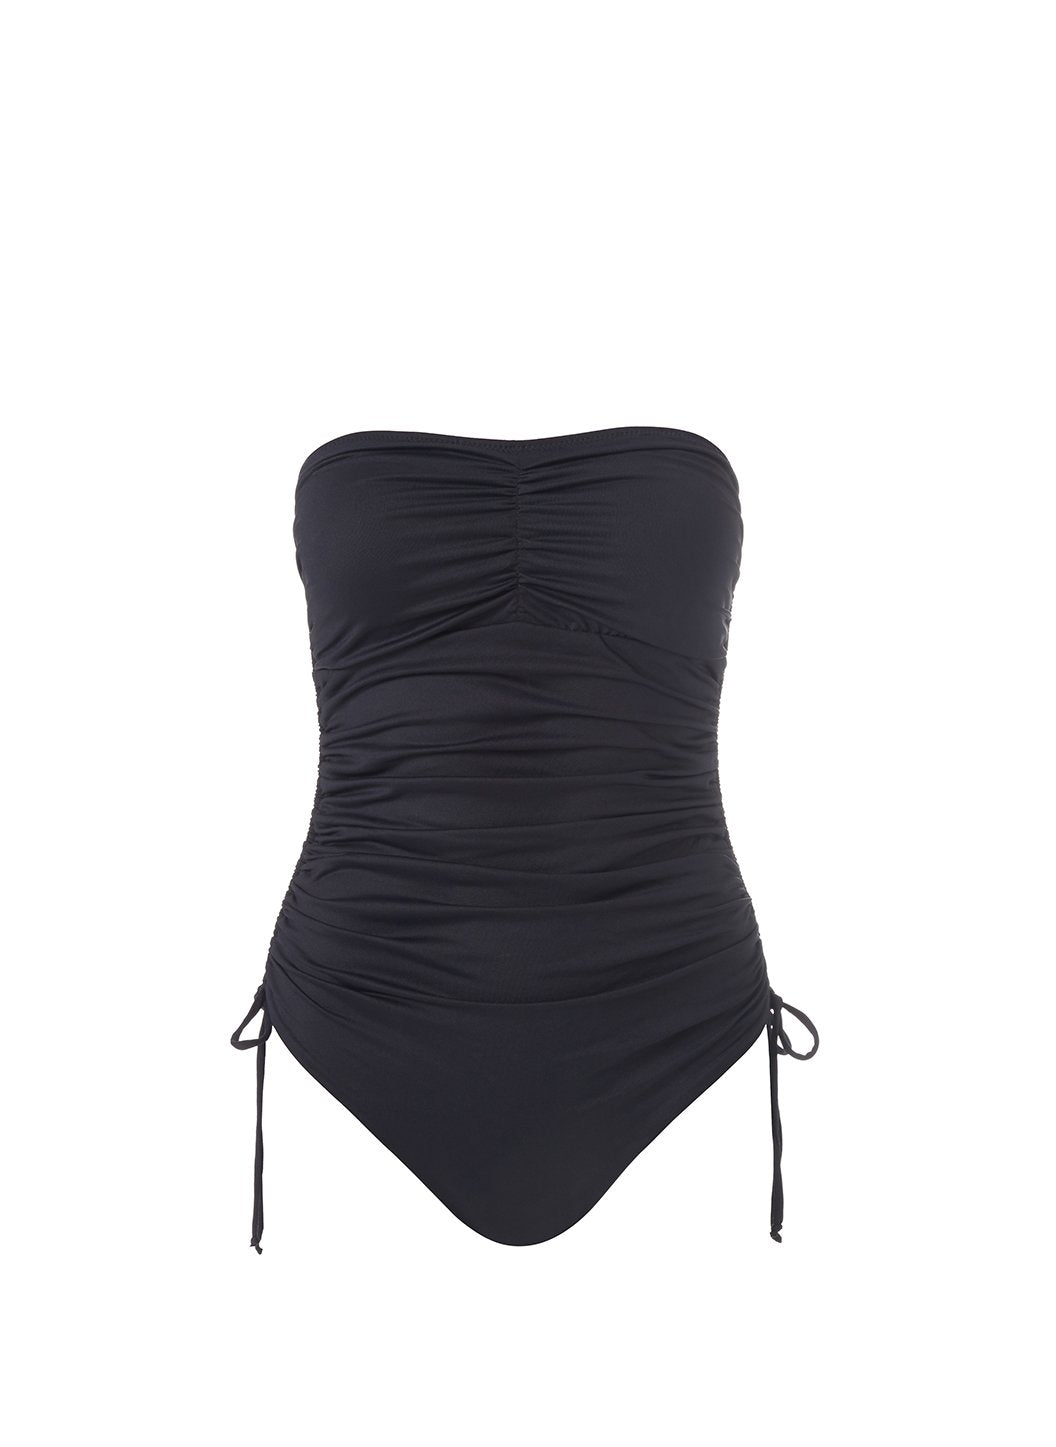 Sydney Black Swimsuit 